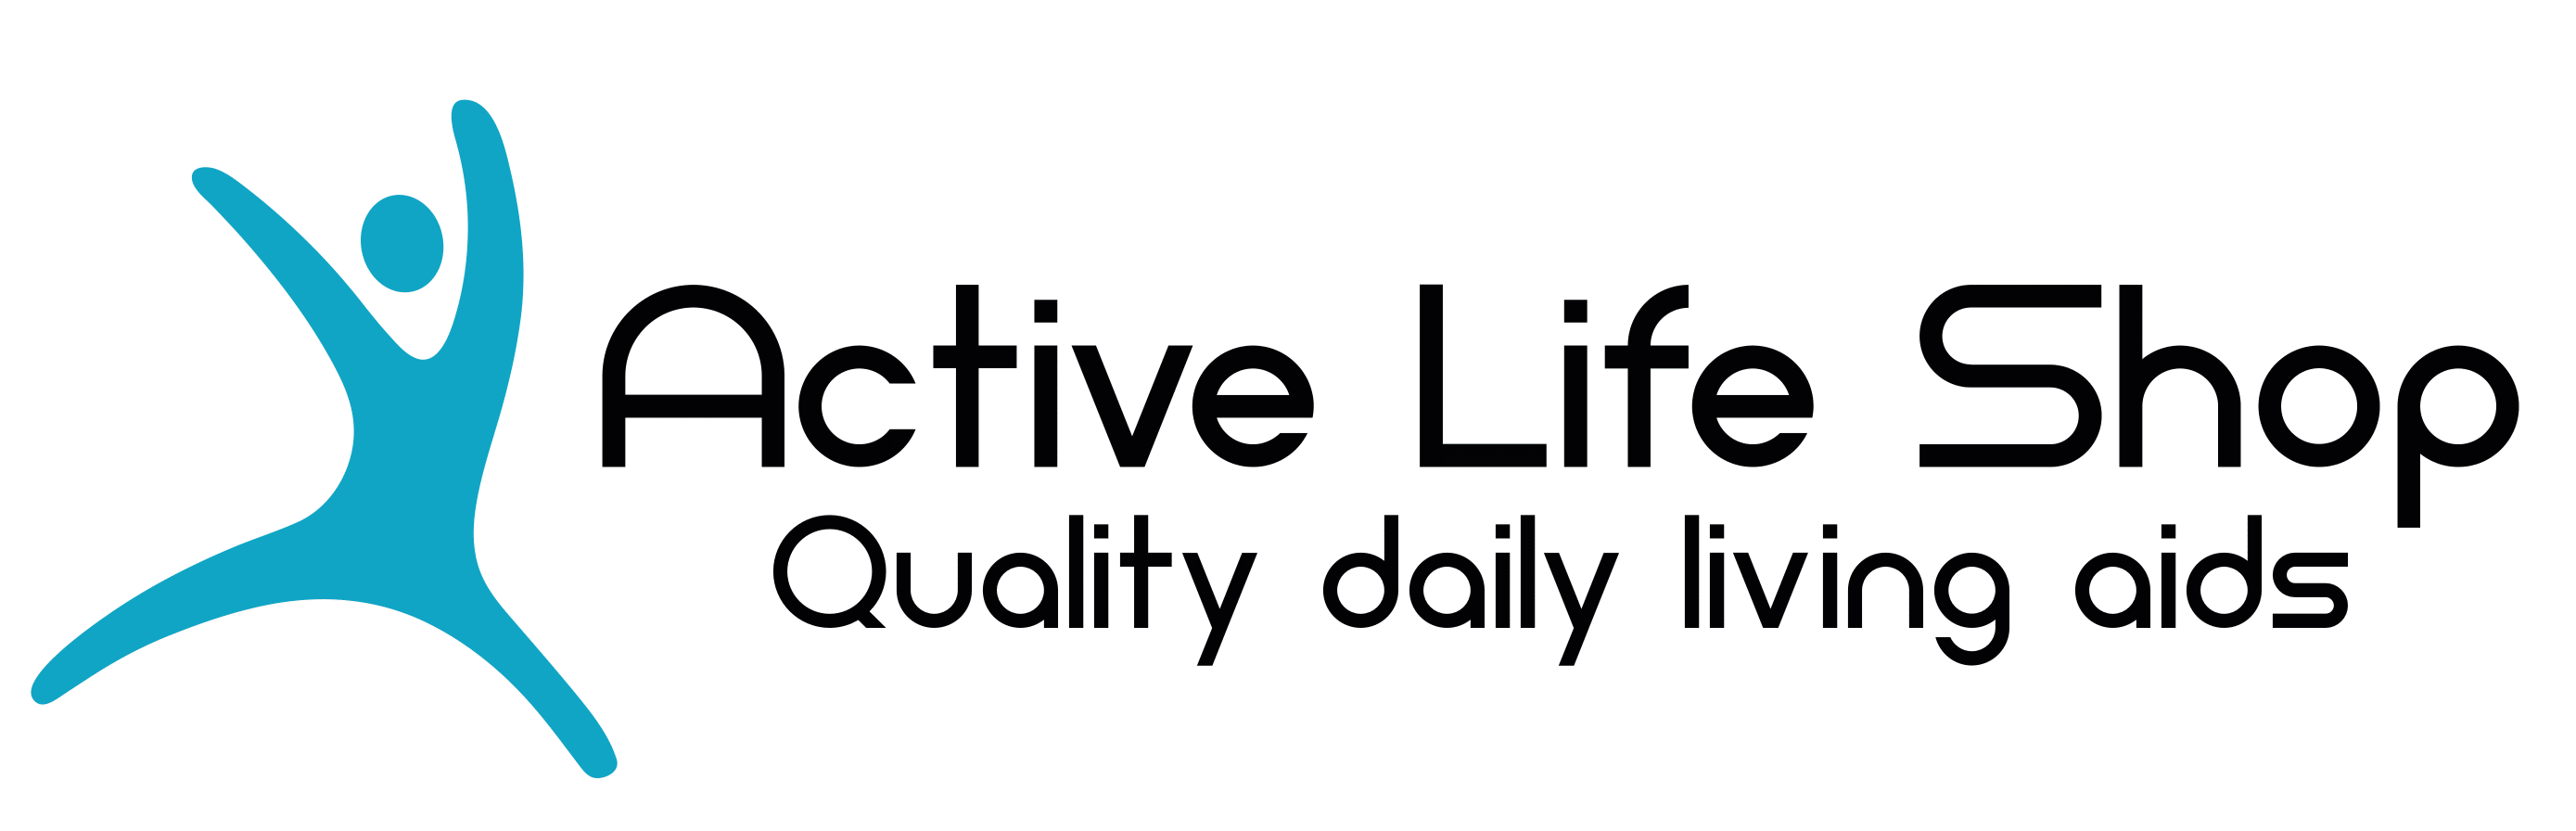 Active Life Shop